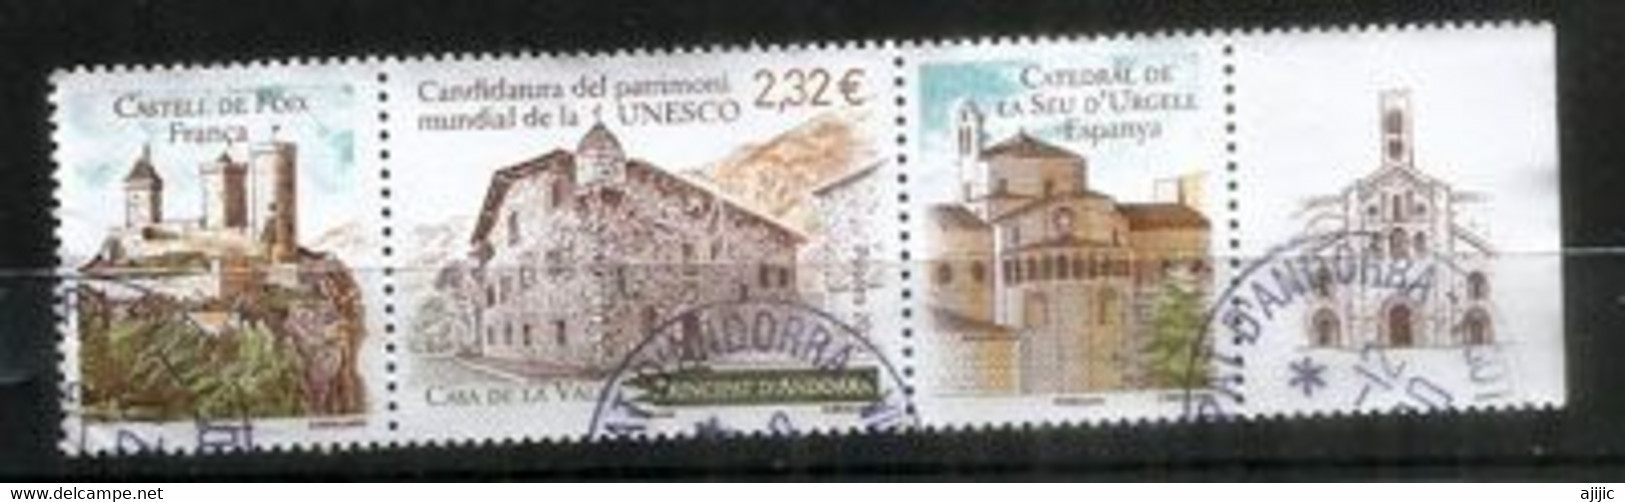 UNESCO.ANDORRA-FRANCE-ESPAGNE (Candidature) Chateau De Foix,Cathedrale Seo Urgell,Casa De La Vall,oblitéré - Gebruikt